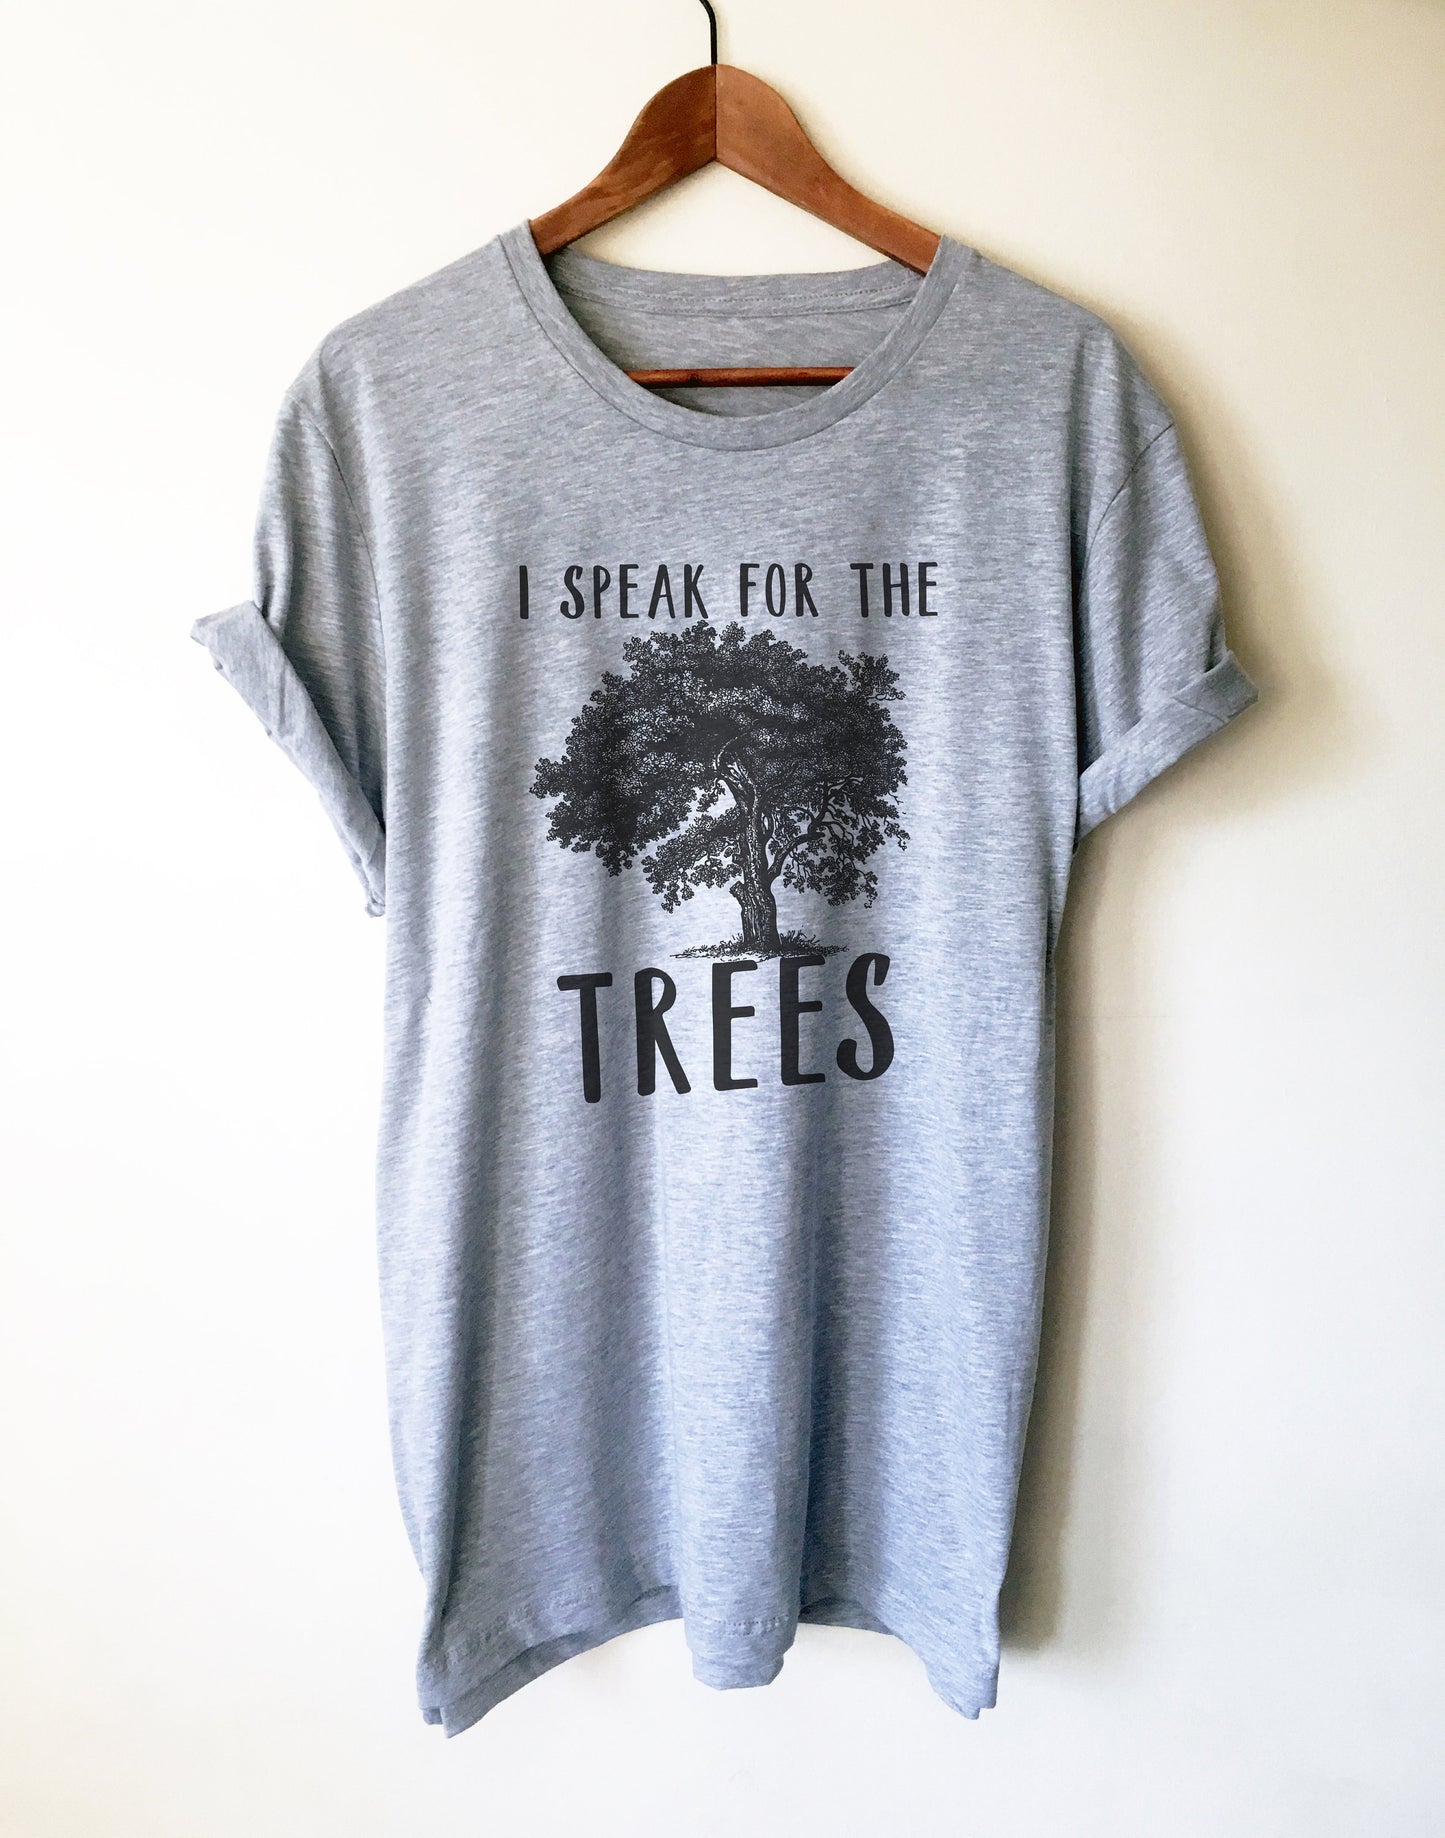 I Speak For The Trees Unisex Shirt - Earth Day Shirt, Environmental TShirt, Nature Shirt, Climate Change Shirt, Tree Hugger, Save The Planet